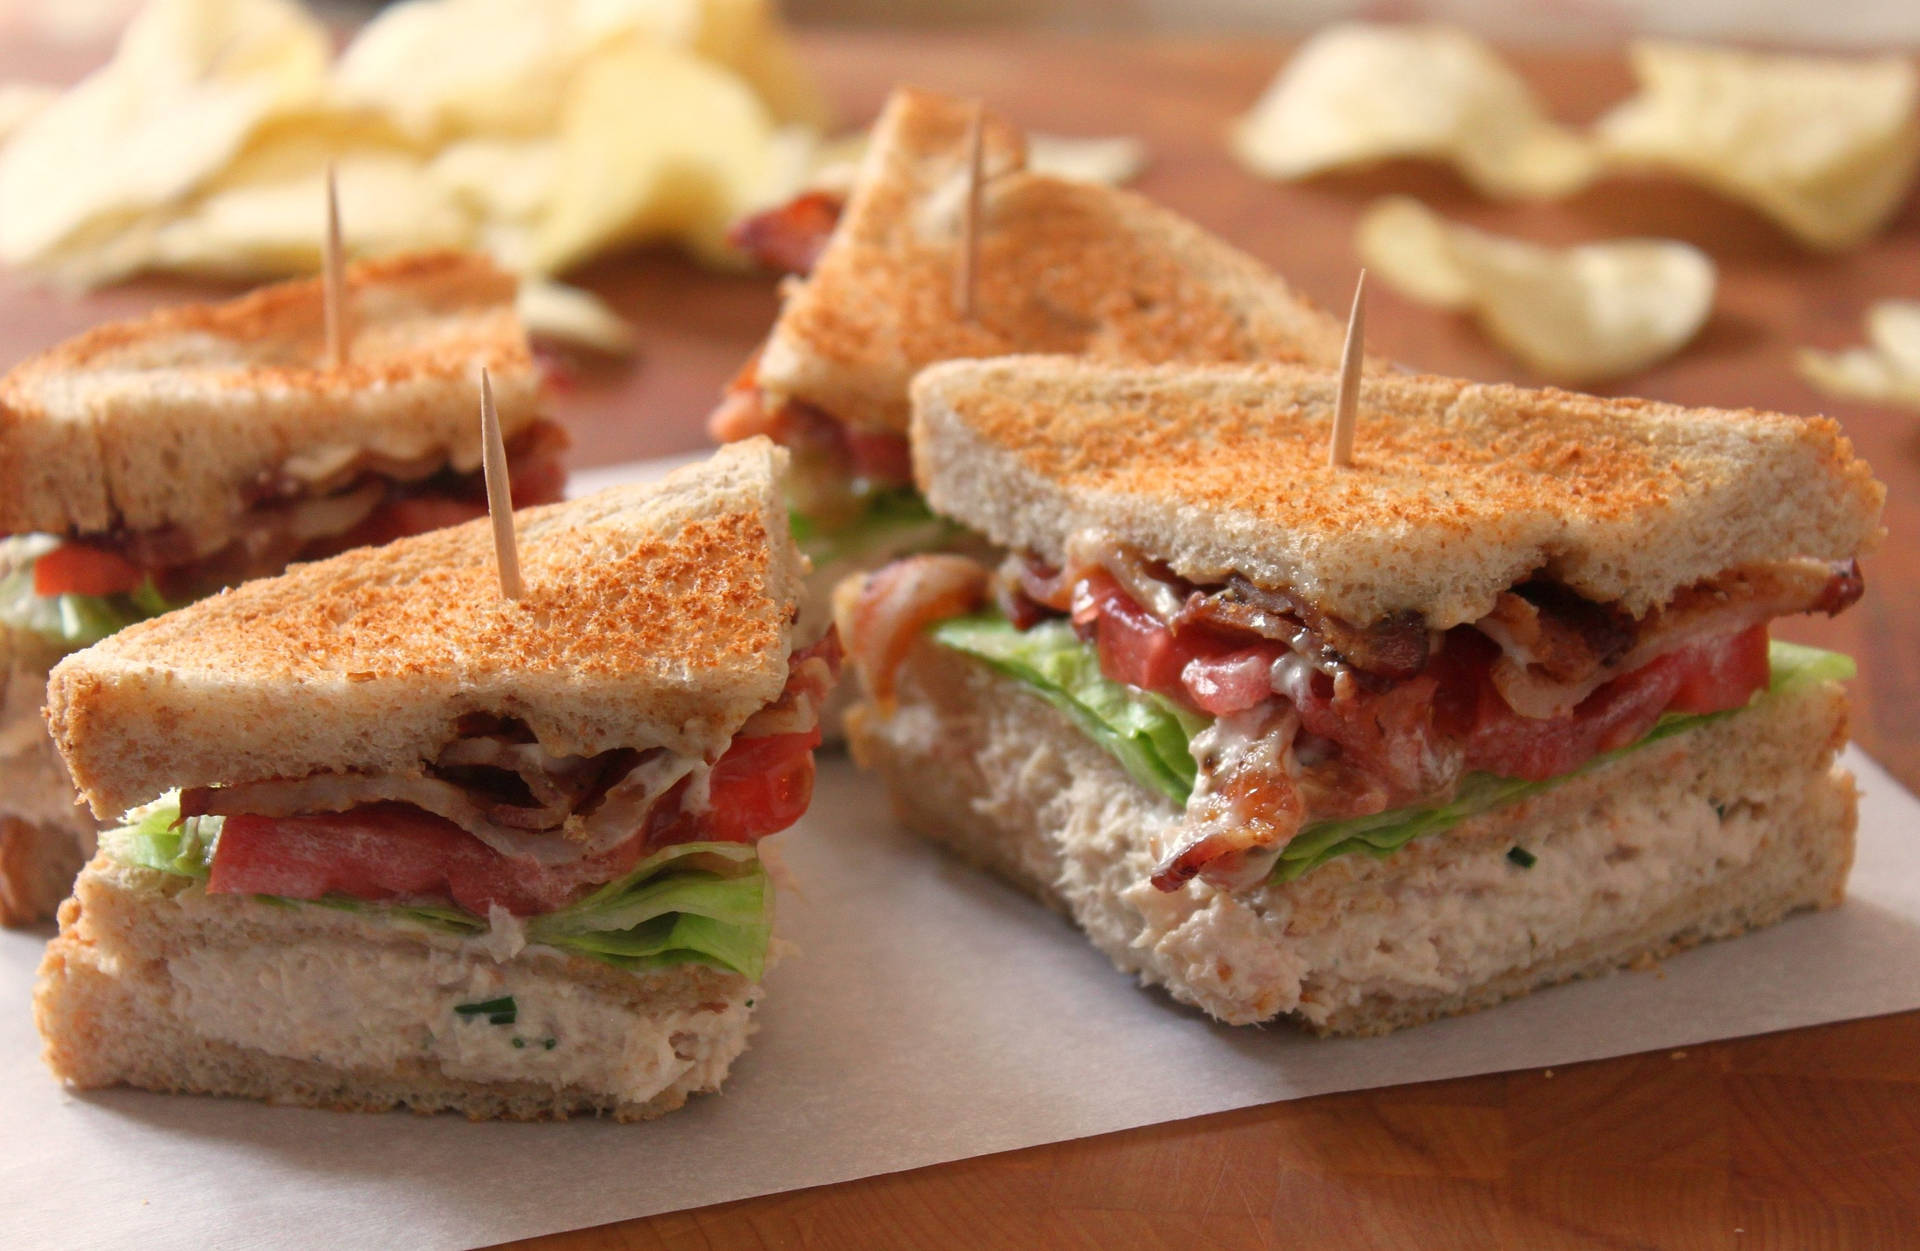 Tasty Tuna Club Sandwich For A Quick Lunch Background